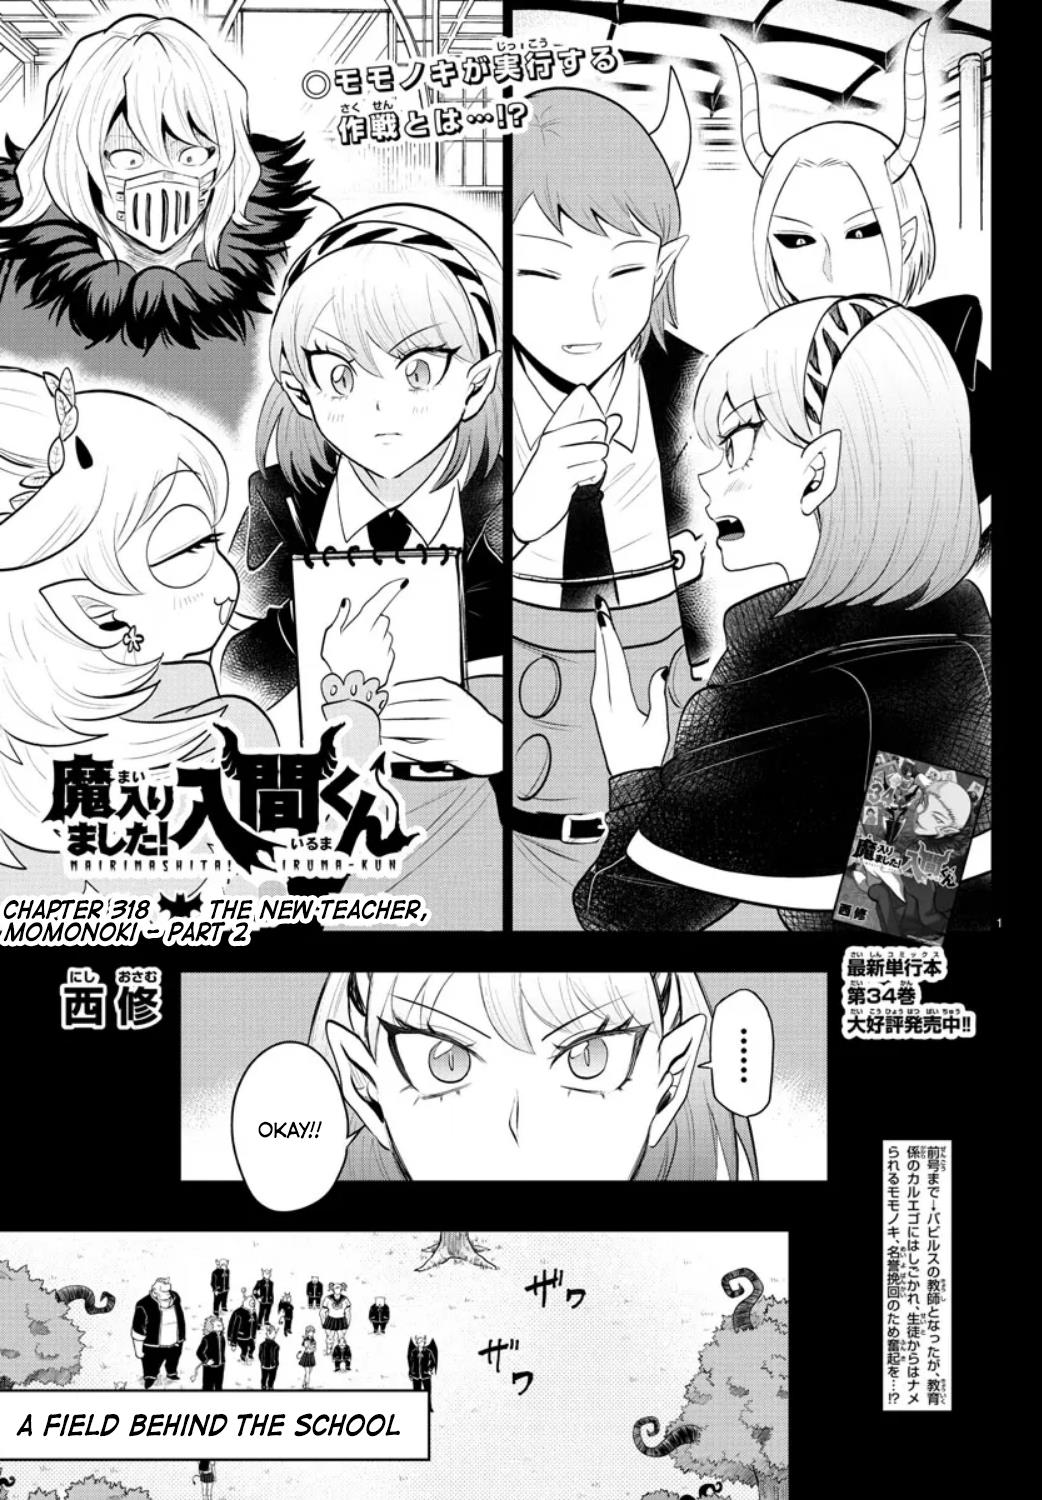 Mairimashita! Iruma-Kun Chapter 318: The New Teacher, Momonoki - Part 2 - Picture 1